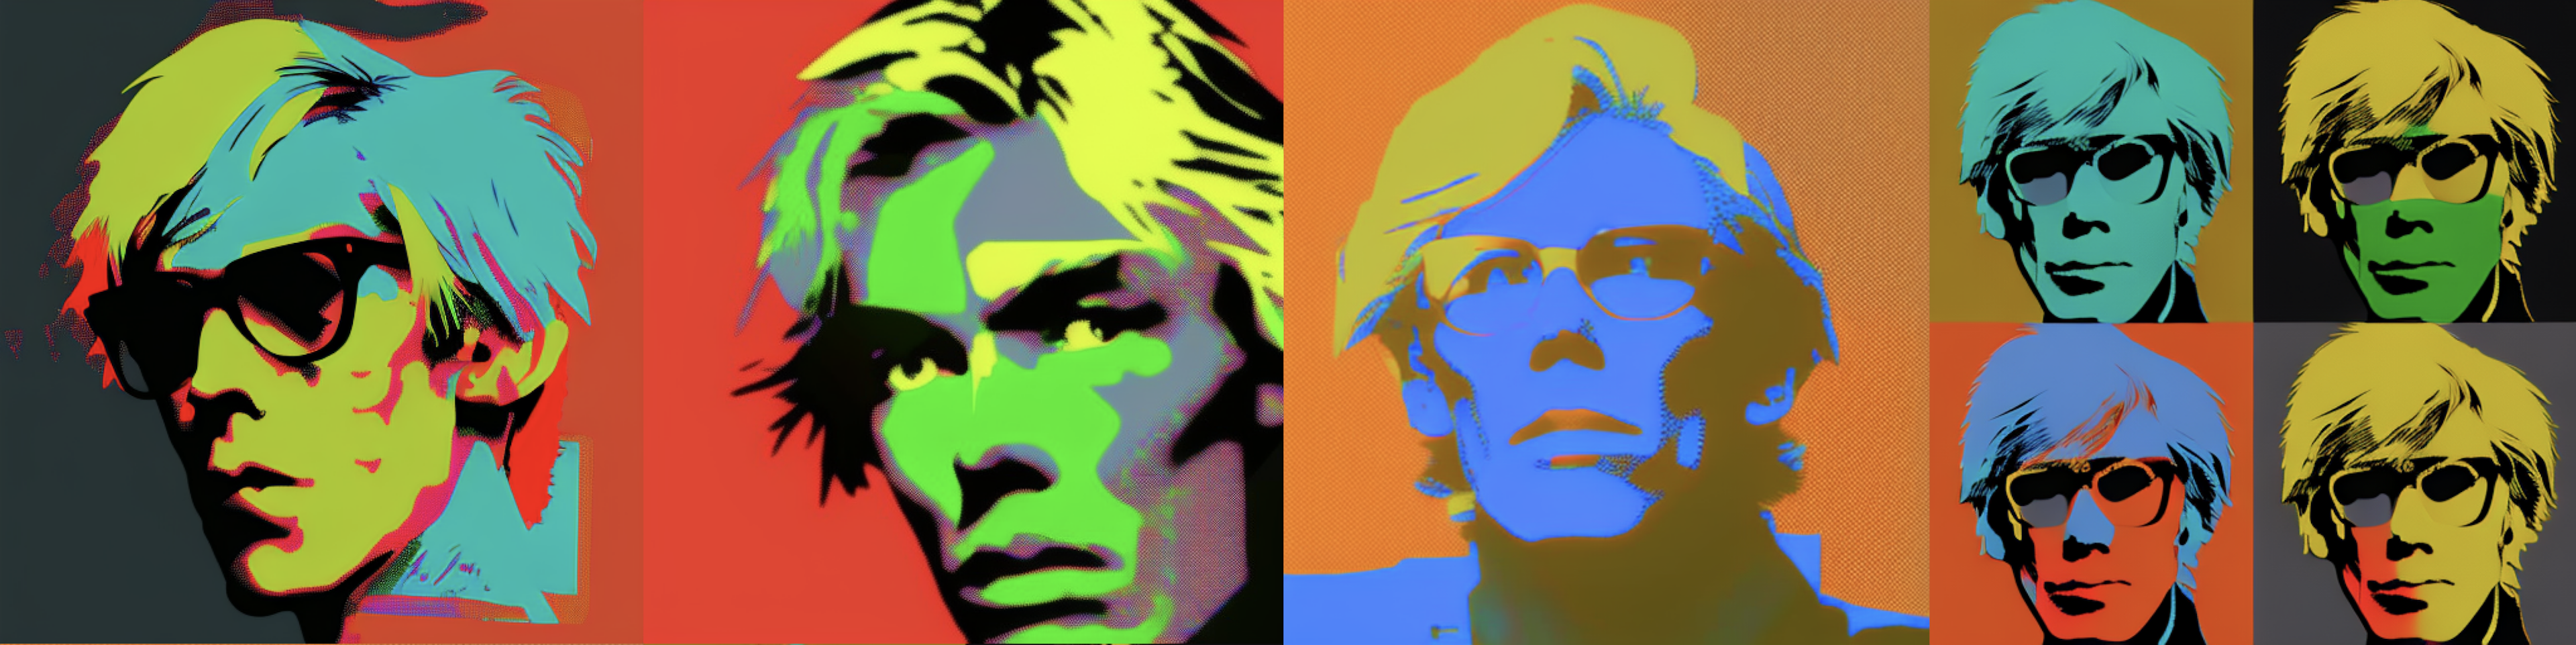 Warhol header.png